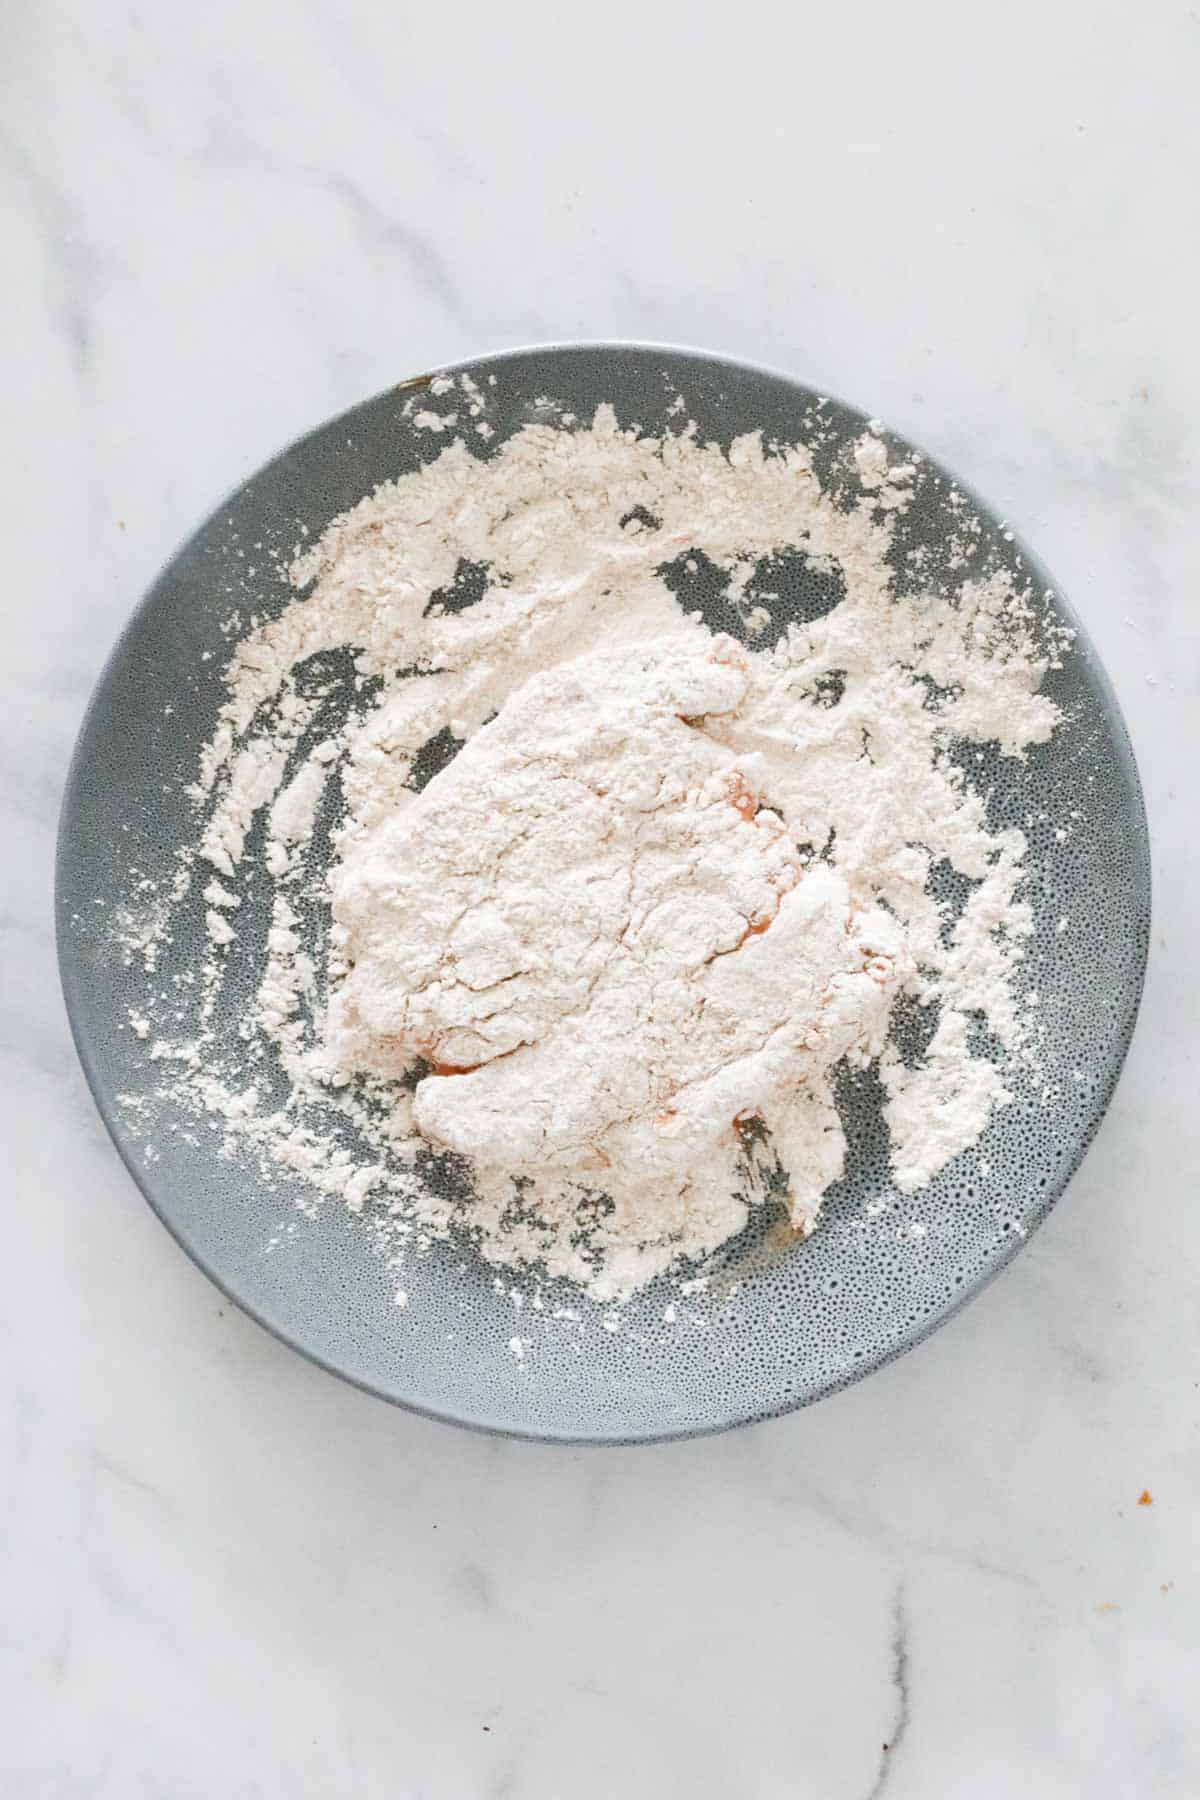 A chicken fillet being tossed in flour.